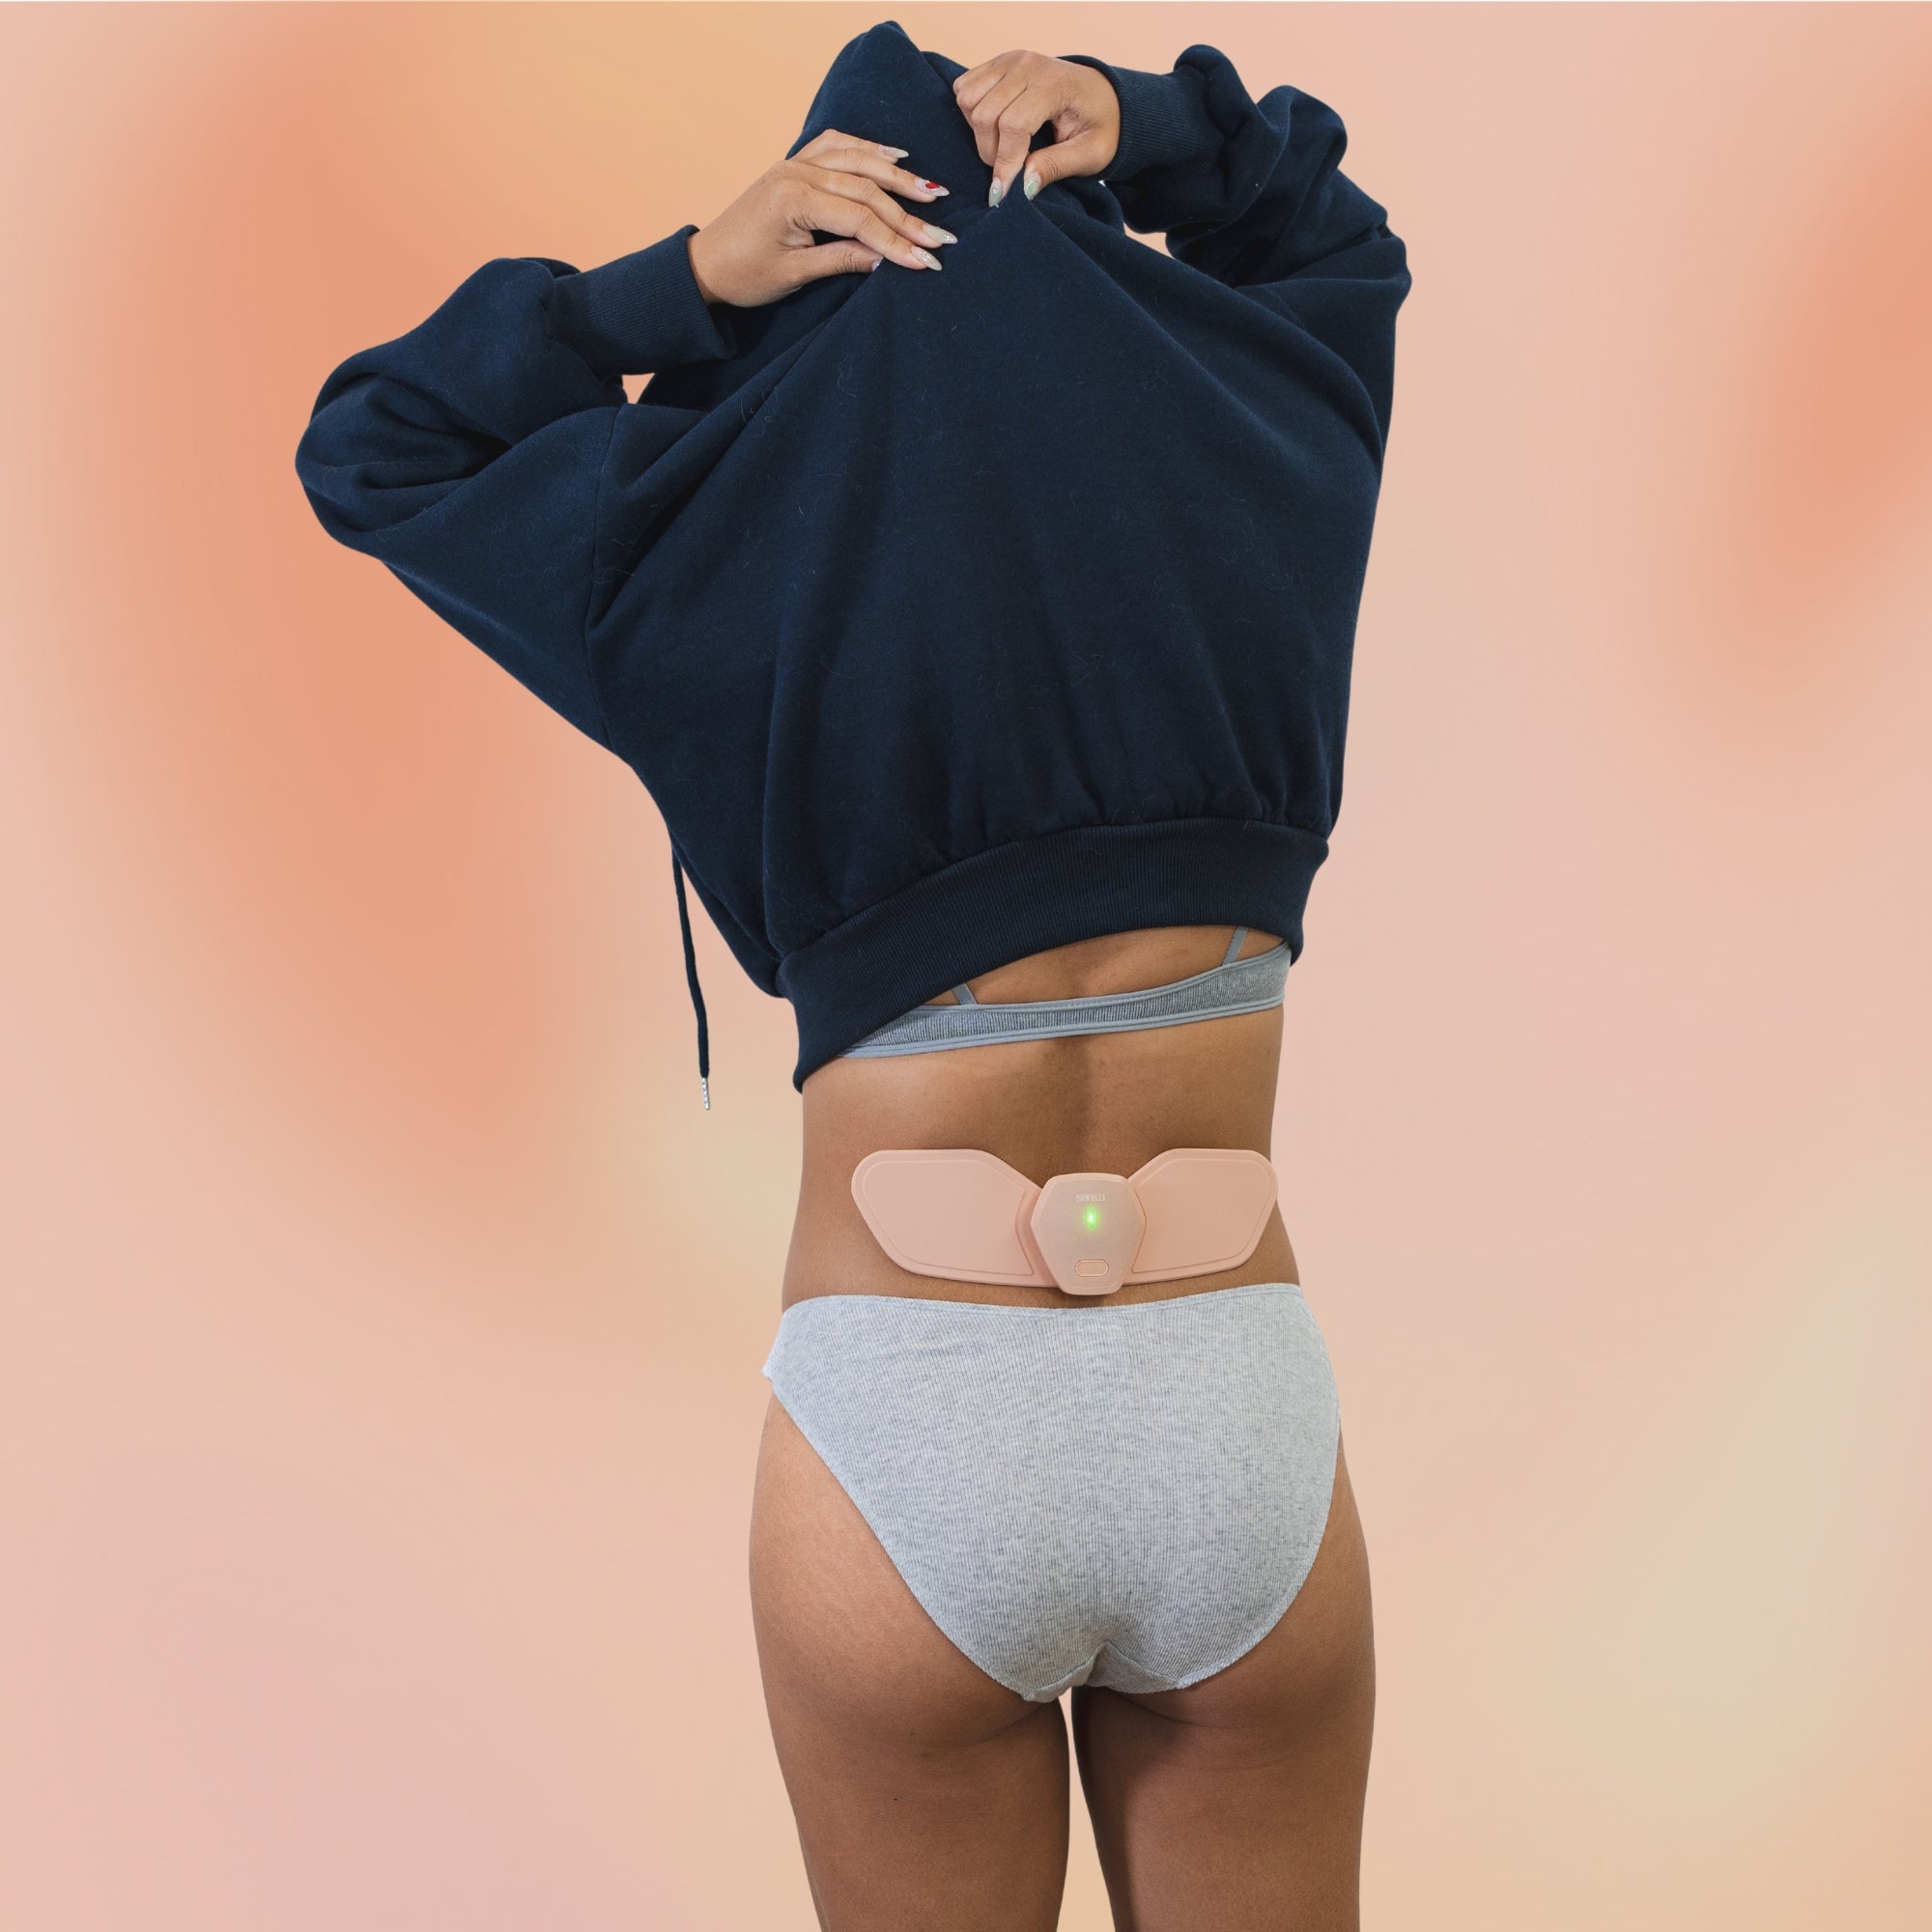 Sens.U Period Cramp Relief Device Providing Symptomatic Back Pain Treatment